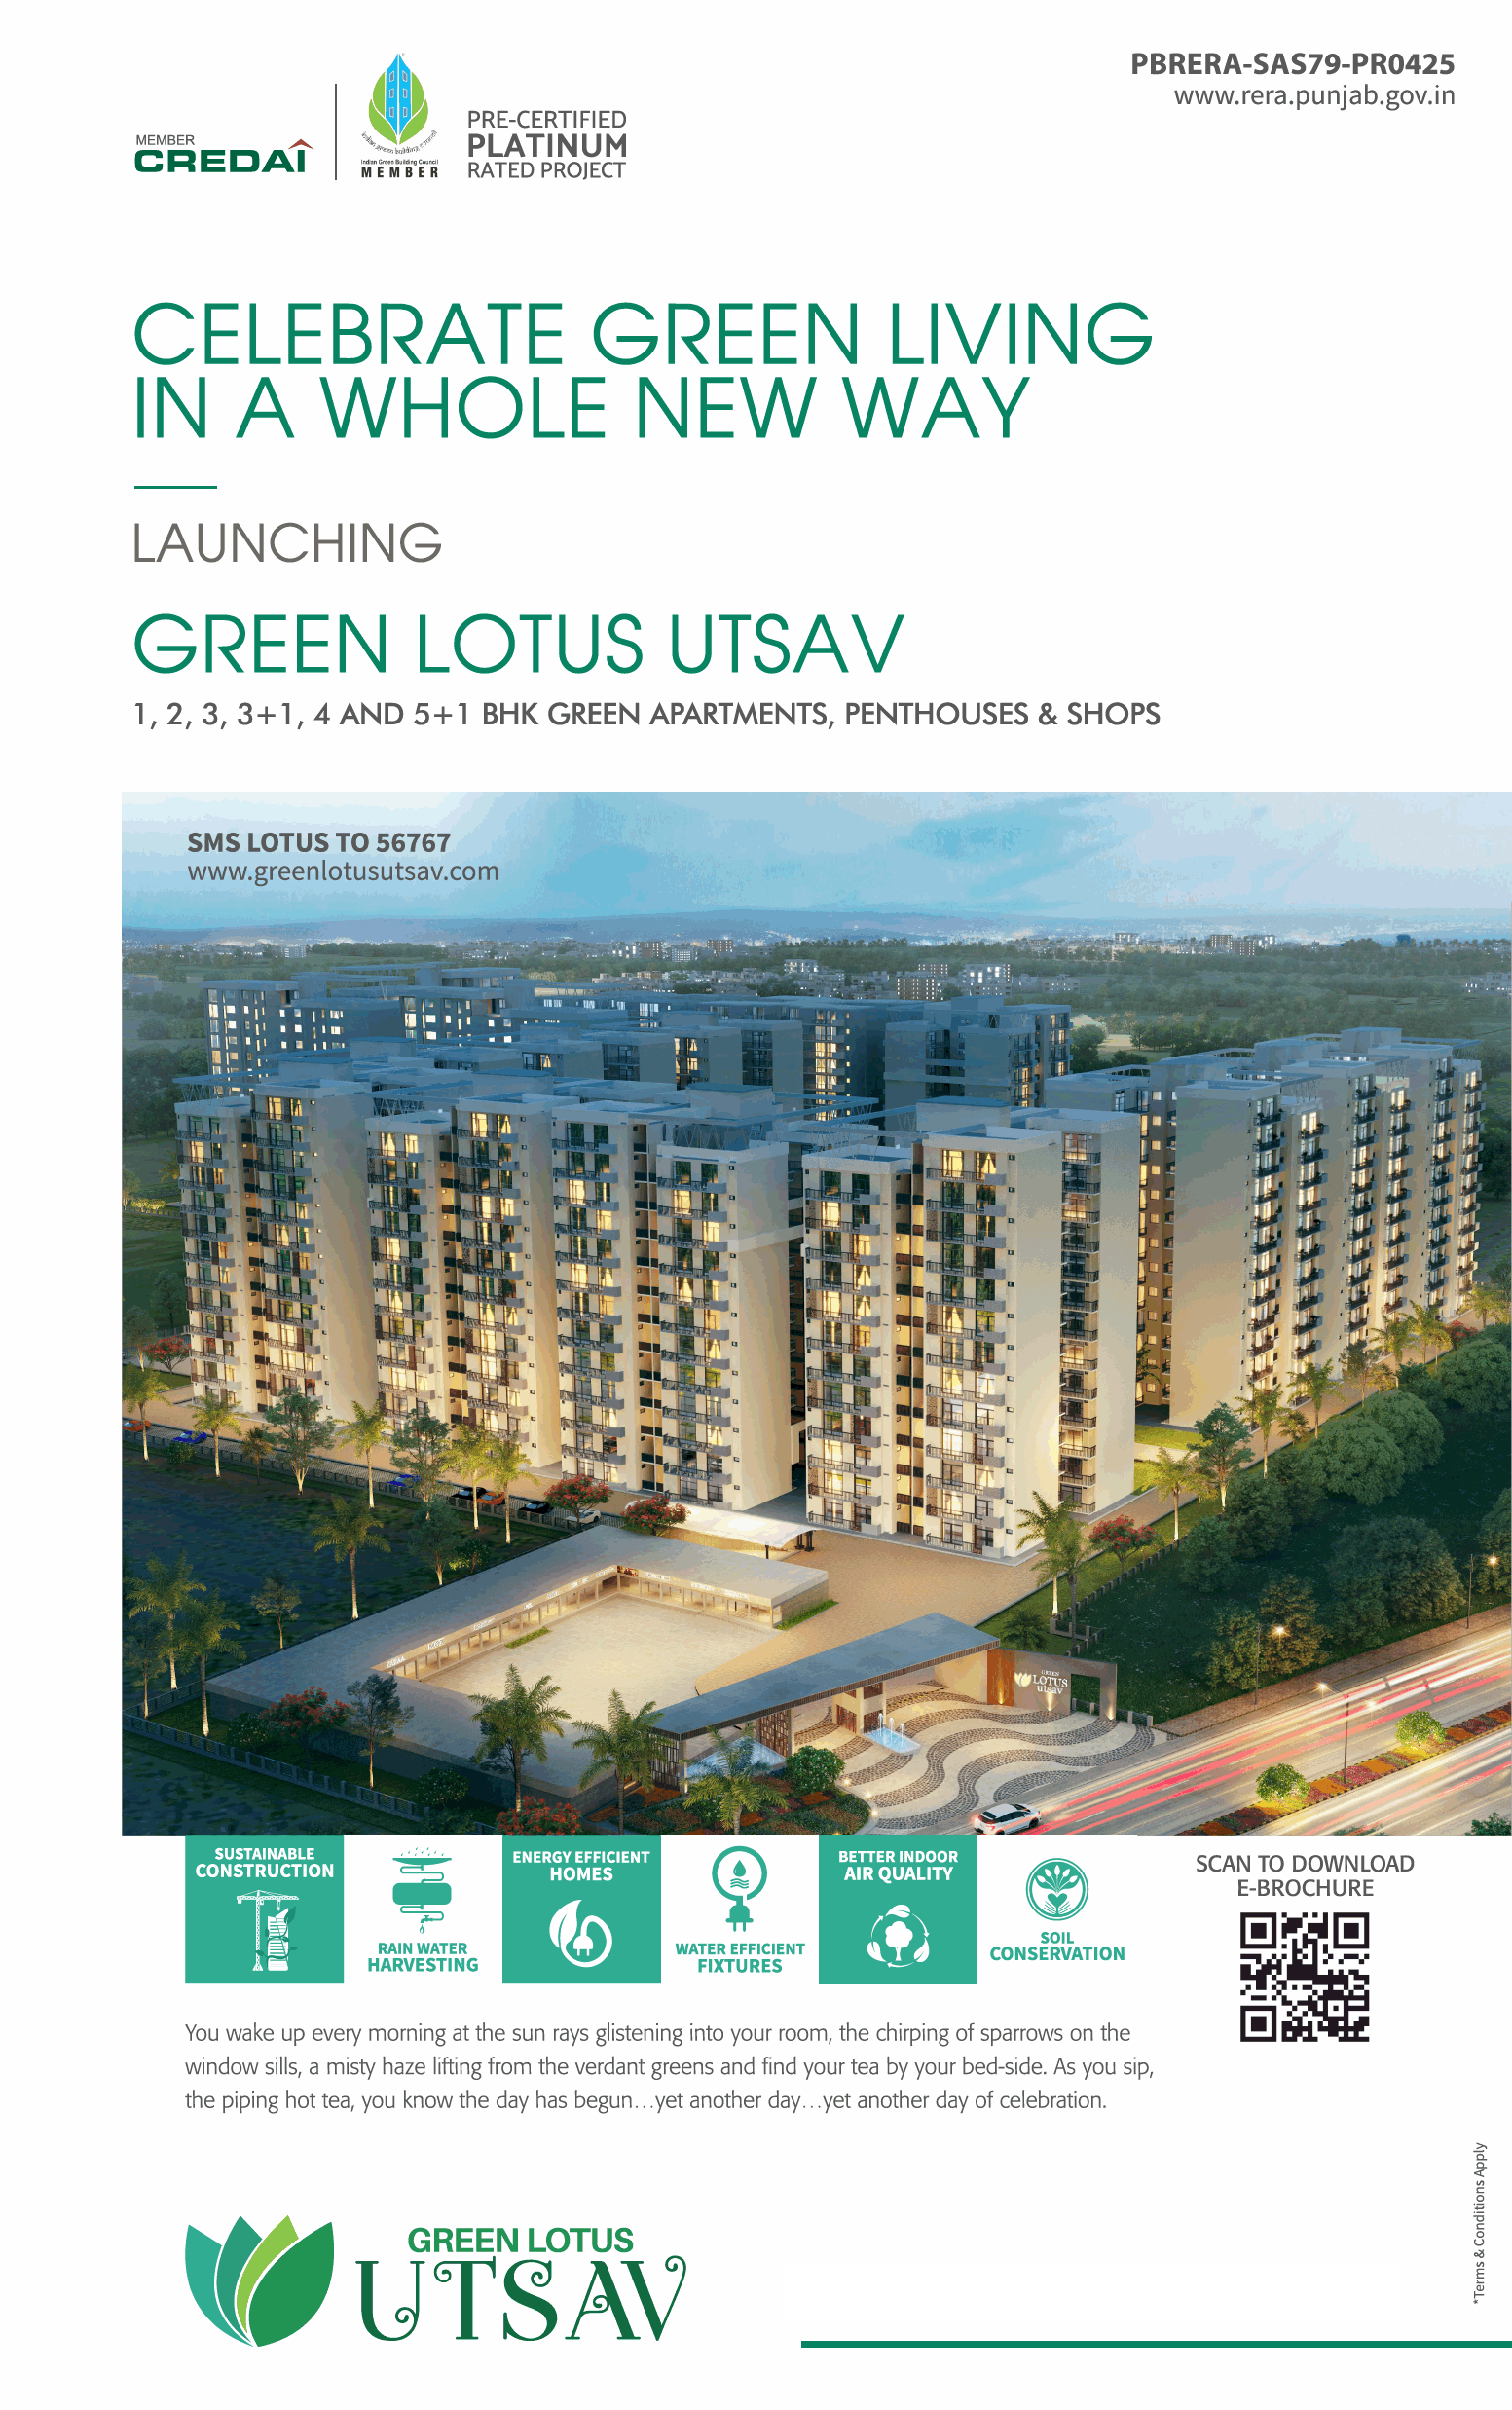 Launching Green Lotus Utsav 1, 2, 3, 3+1, 4 and 5+1 BHK green apartments, penthouses & shops in Chandigarh Update